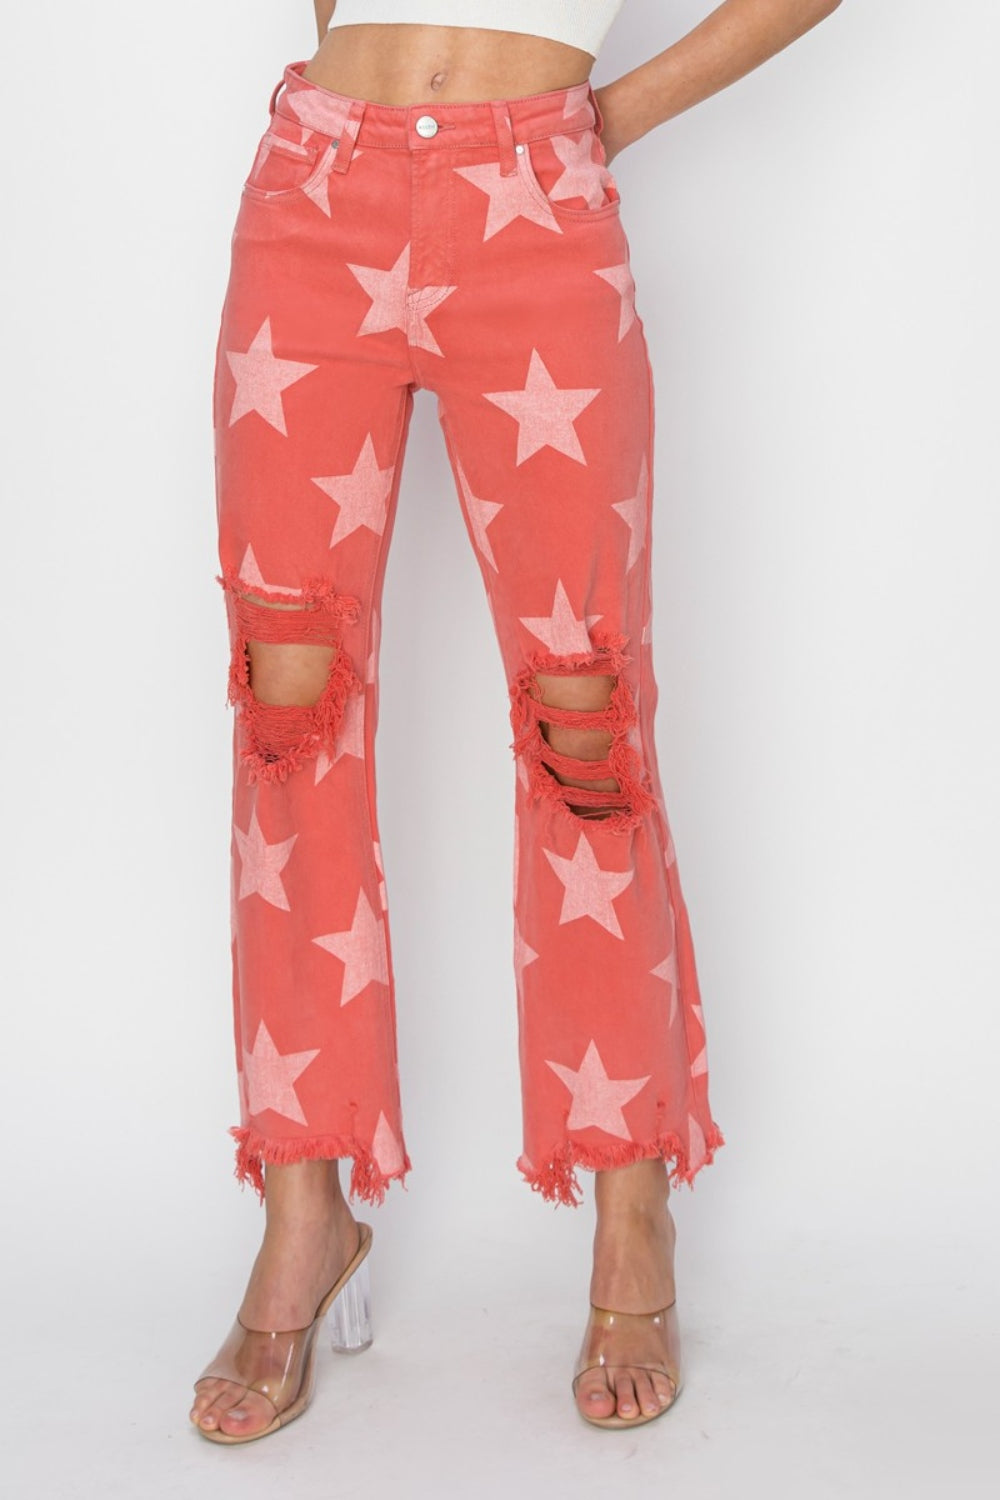 RISEN Star Pattern Jeans in Peach Blossom